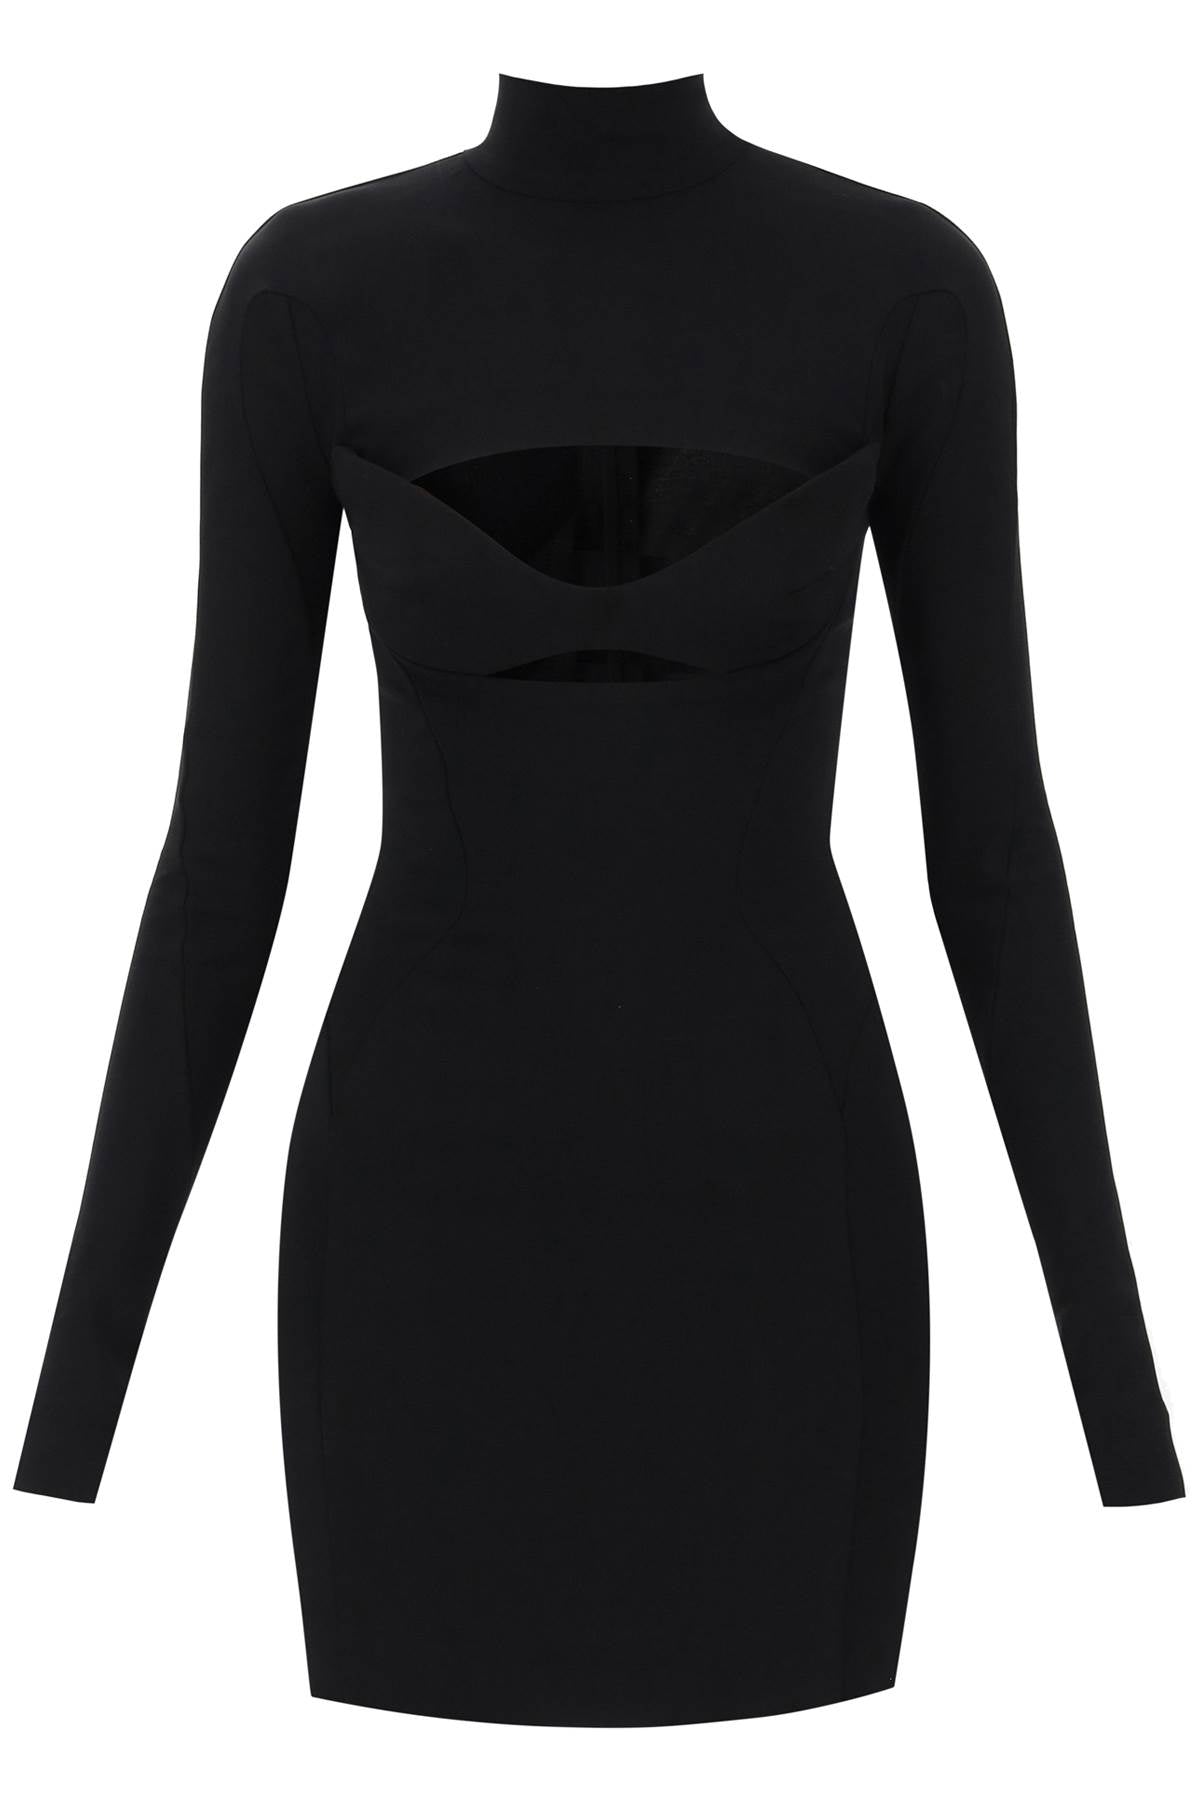 MUGLER Black Cut-Out Bust Mini Dress for Women - The Perfect Statement Piece